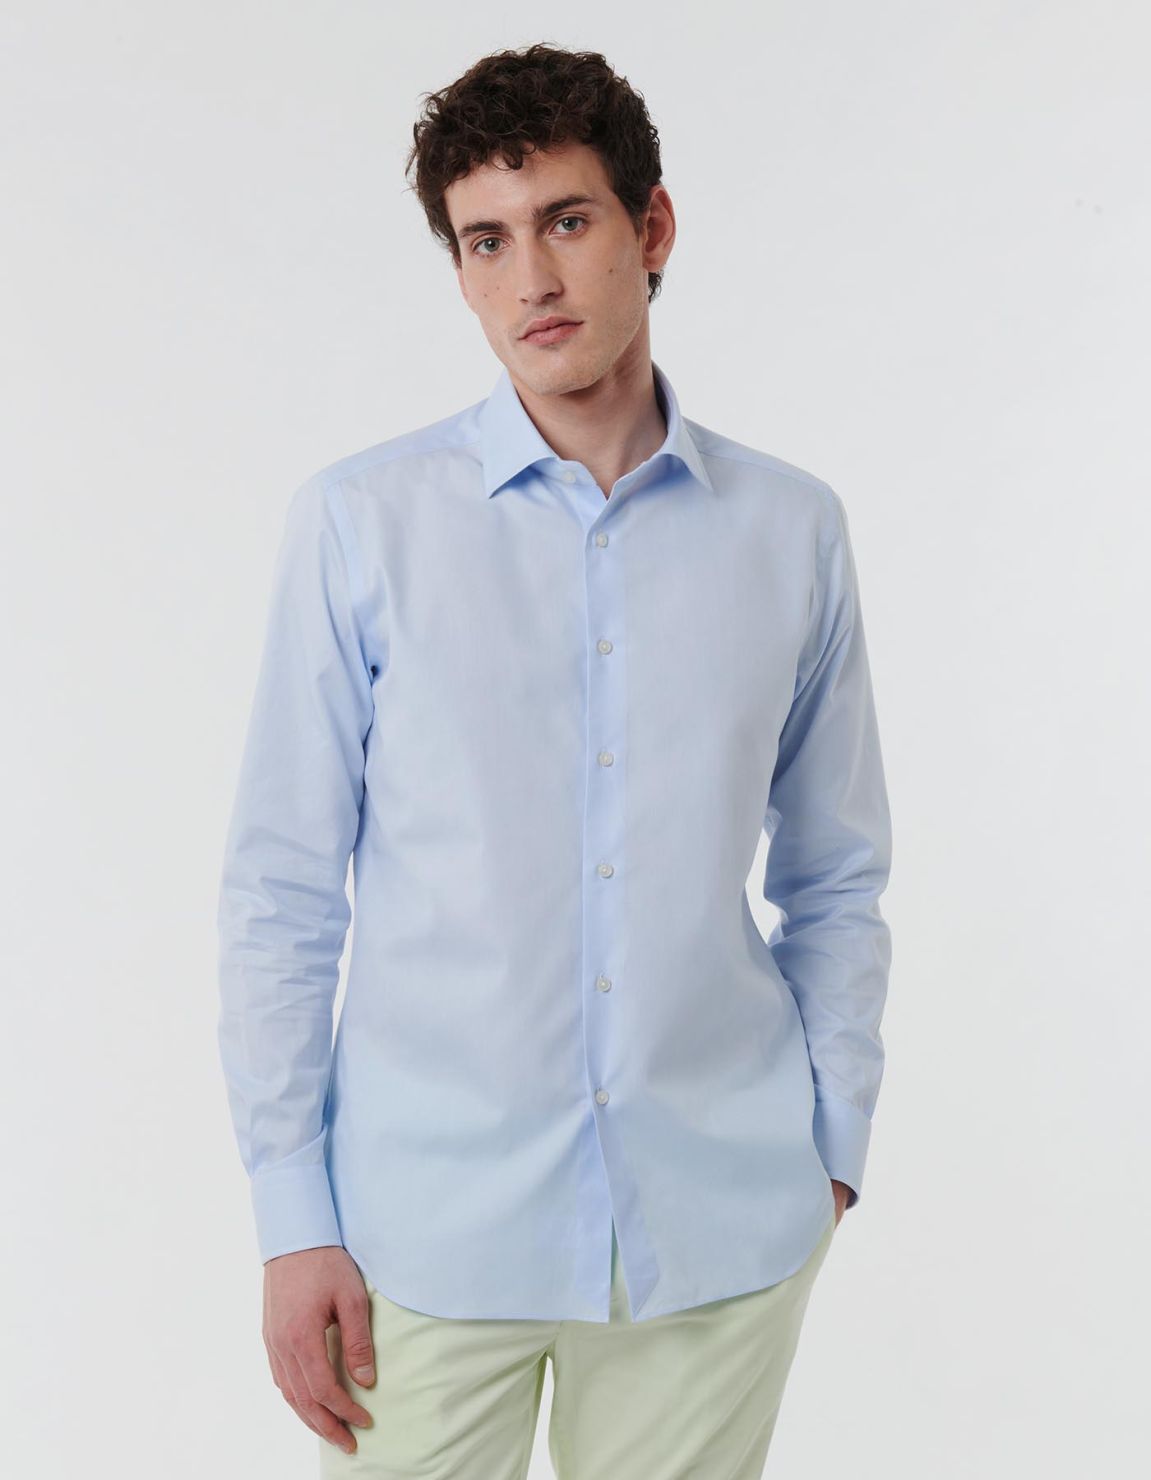 Light Blue Oxford Solid colour Shirt Collar spread Tailor Custom Fit 3